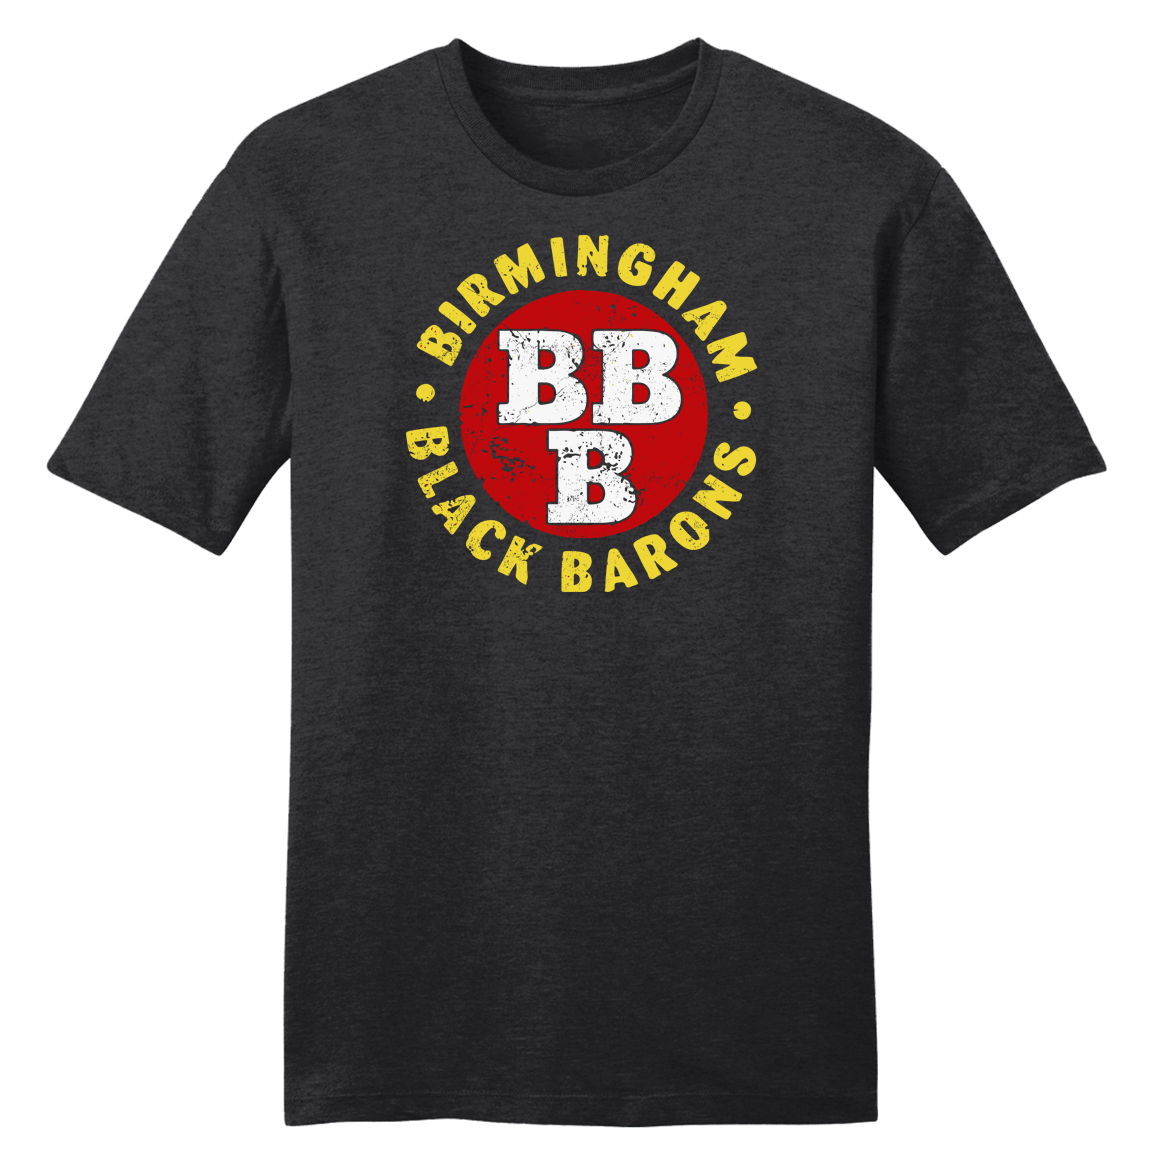 birmingham black barons jersey